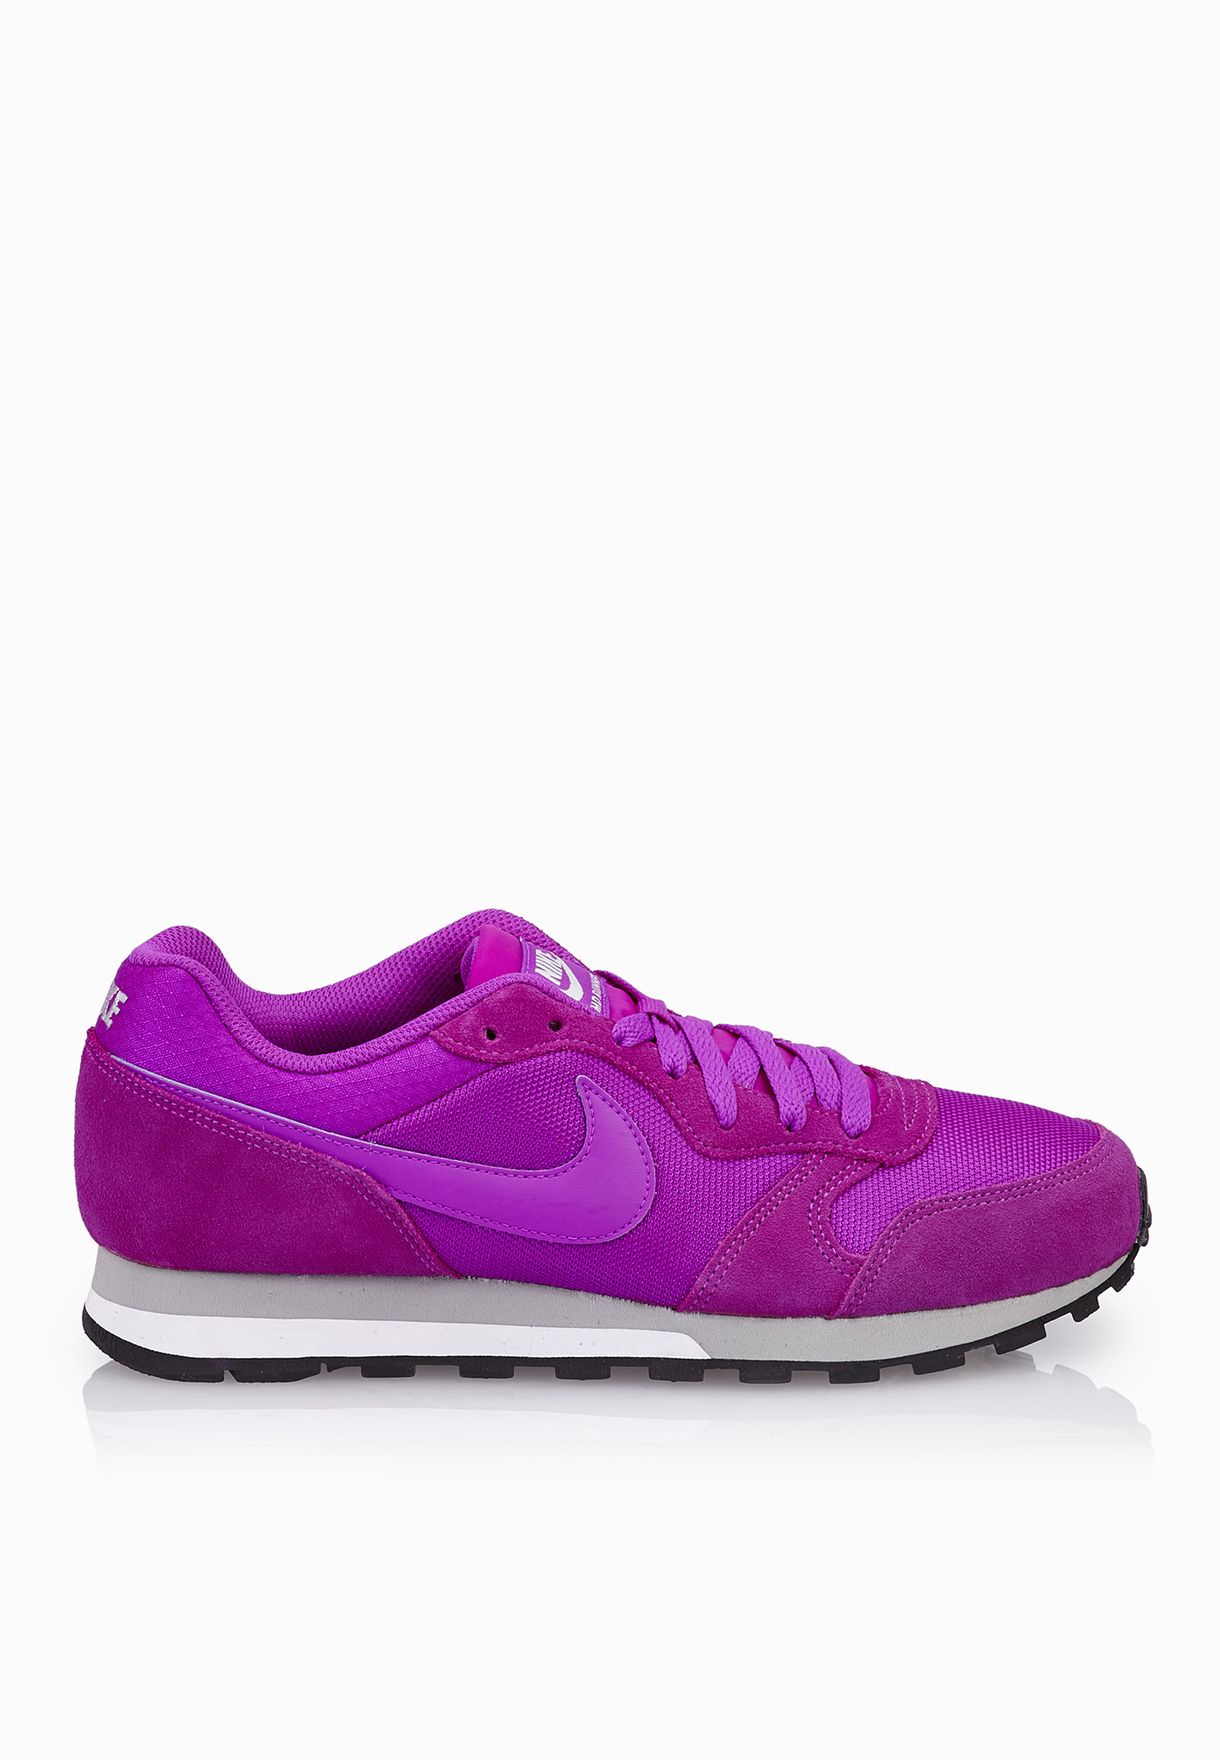 nike md runner 2 purple